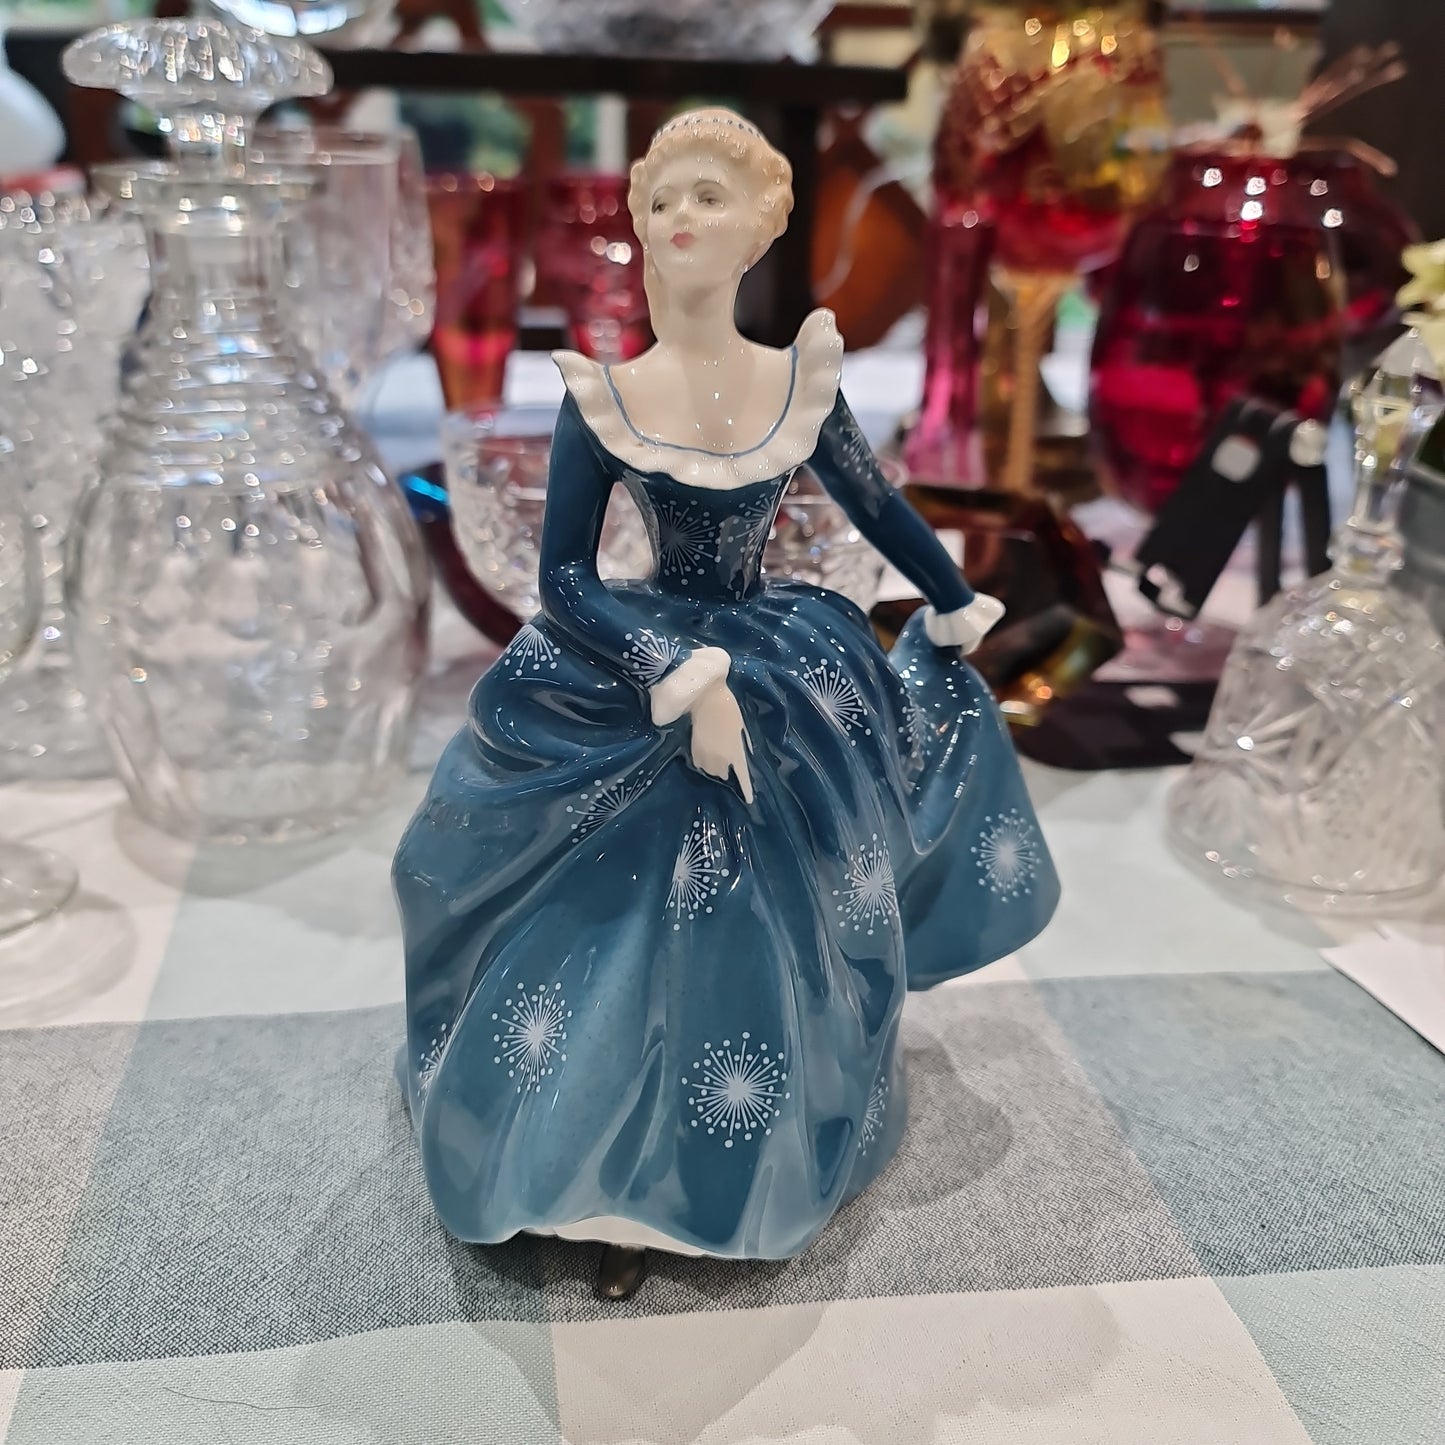 Royal Doulton fragrance figurine